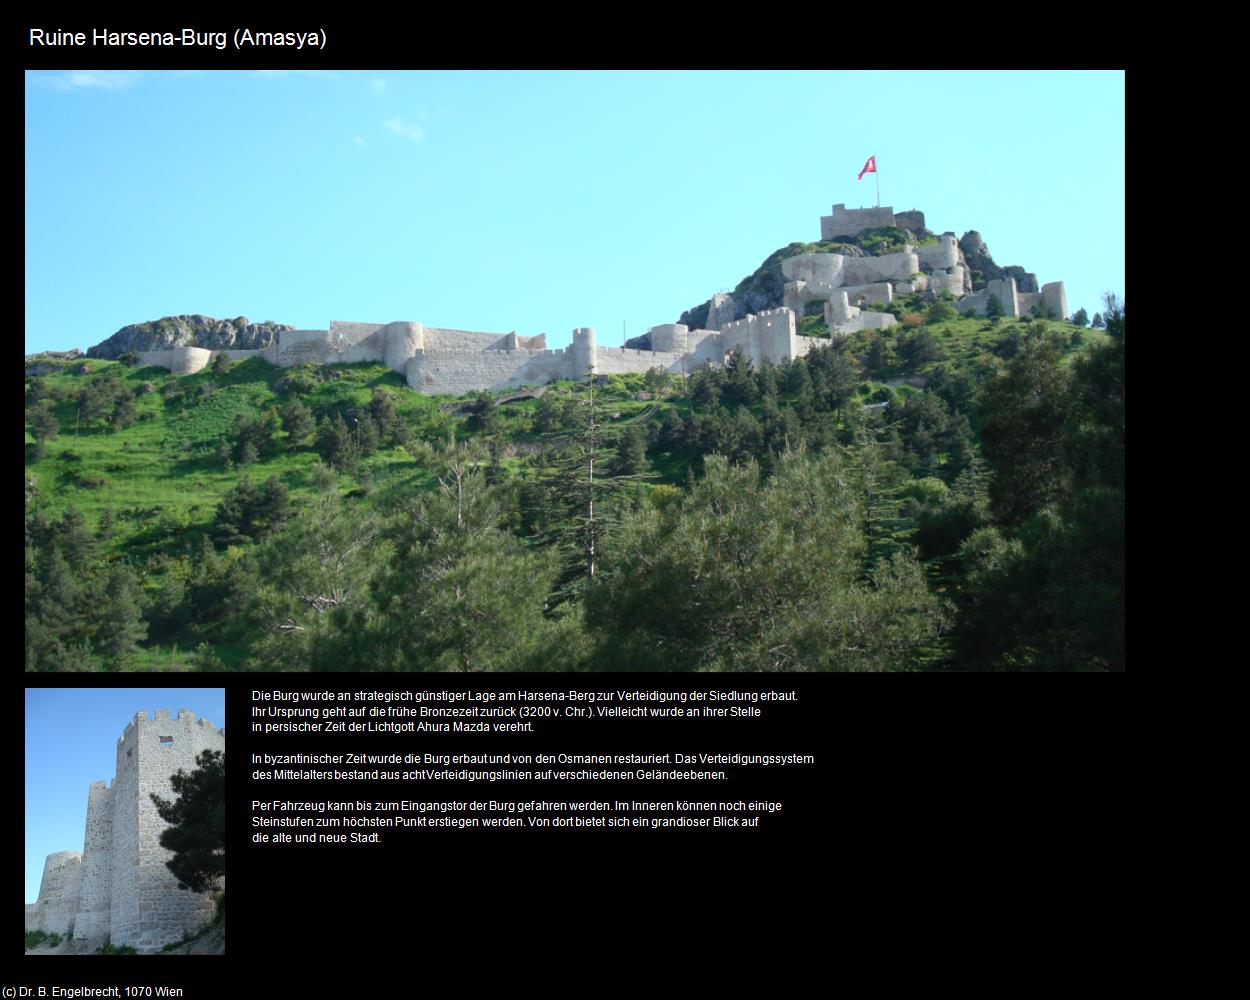 Ruine Harsena-Burg (Amasya) in TÜRKEI